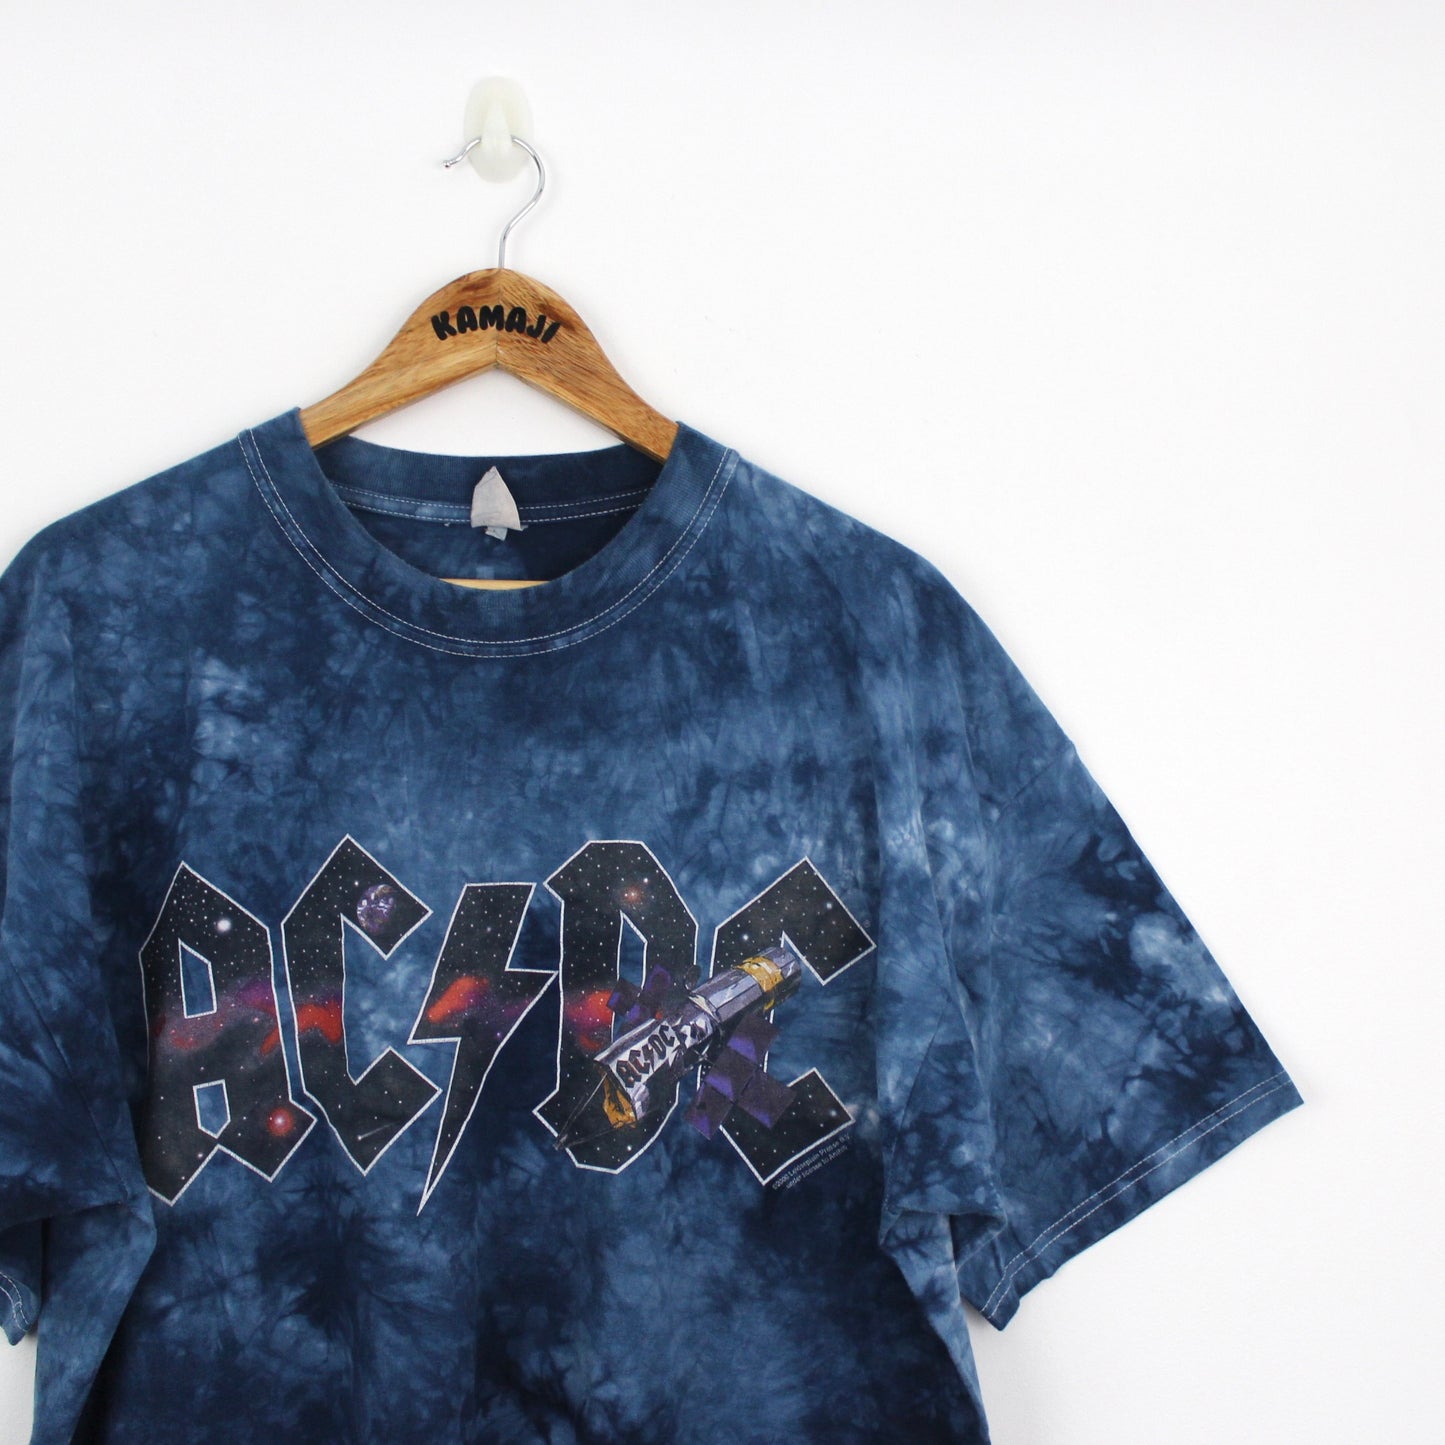 AC/DC Stiff Upper Lip World Tour T-Shirt, 2000, Jt’s Tag, Space Print Tie-Dye (XL)